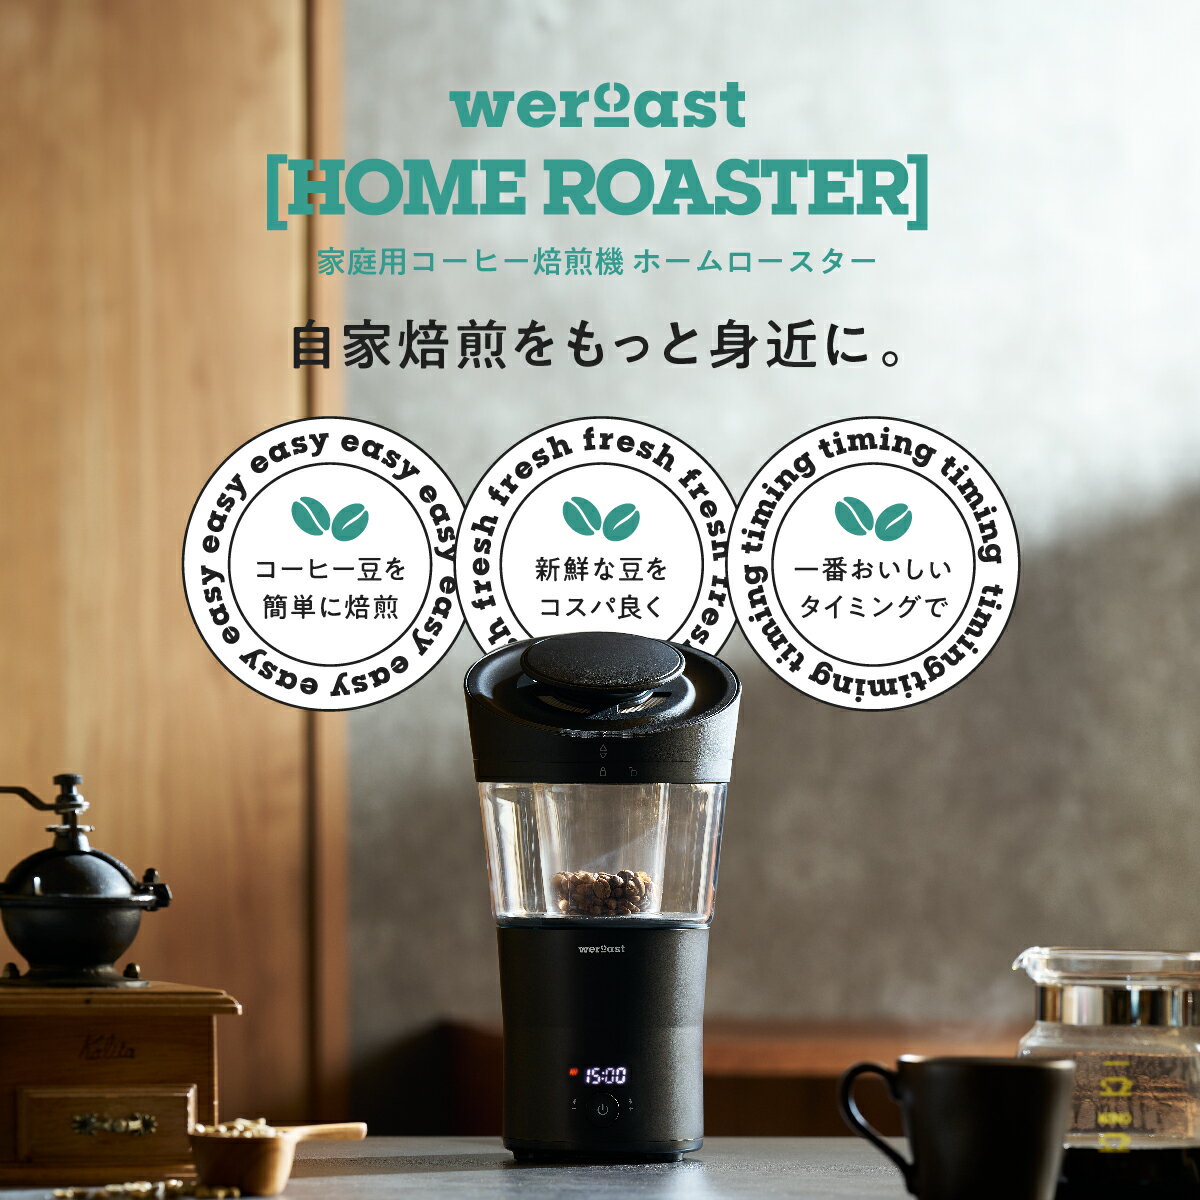 weroast HOME ROASTER 家庭用 焙煎機 熱風式 ホームロースター ボルテックス熱風式 ウィーロースト コーヒーロースター コーヒー焙煎機 コーヒー 珈琲 2